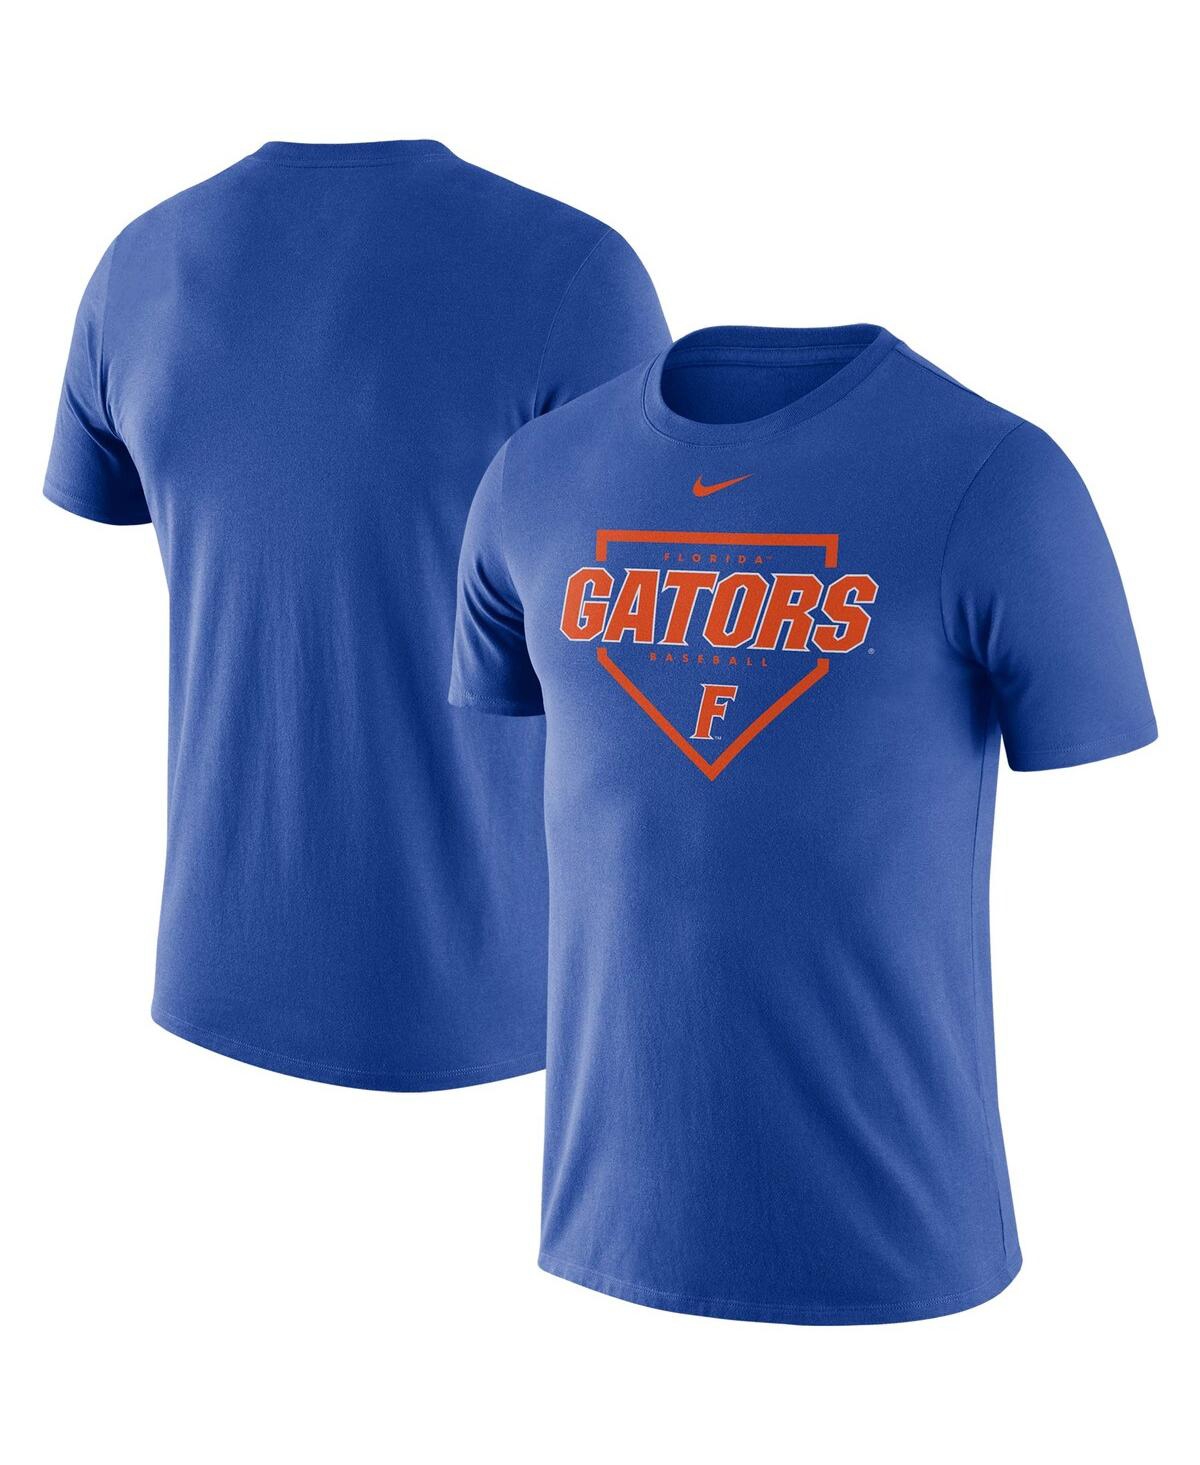 Men's Nike Royal Florida Gators Baseball Plate Performance T-shirt